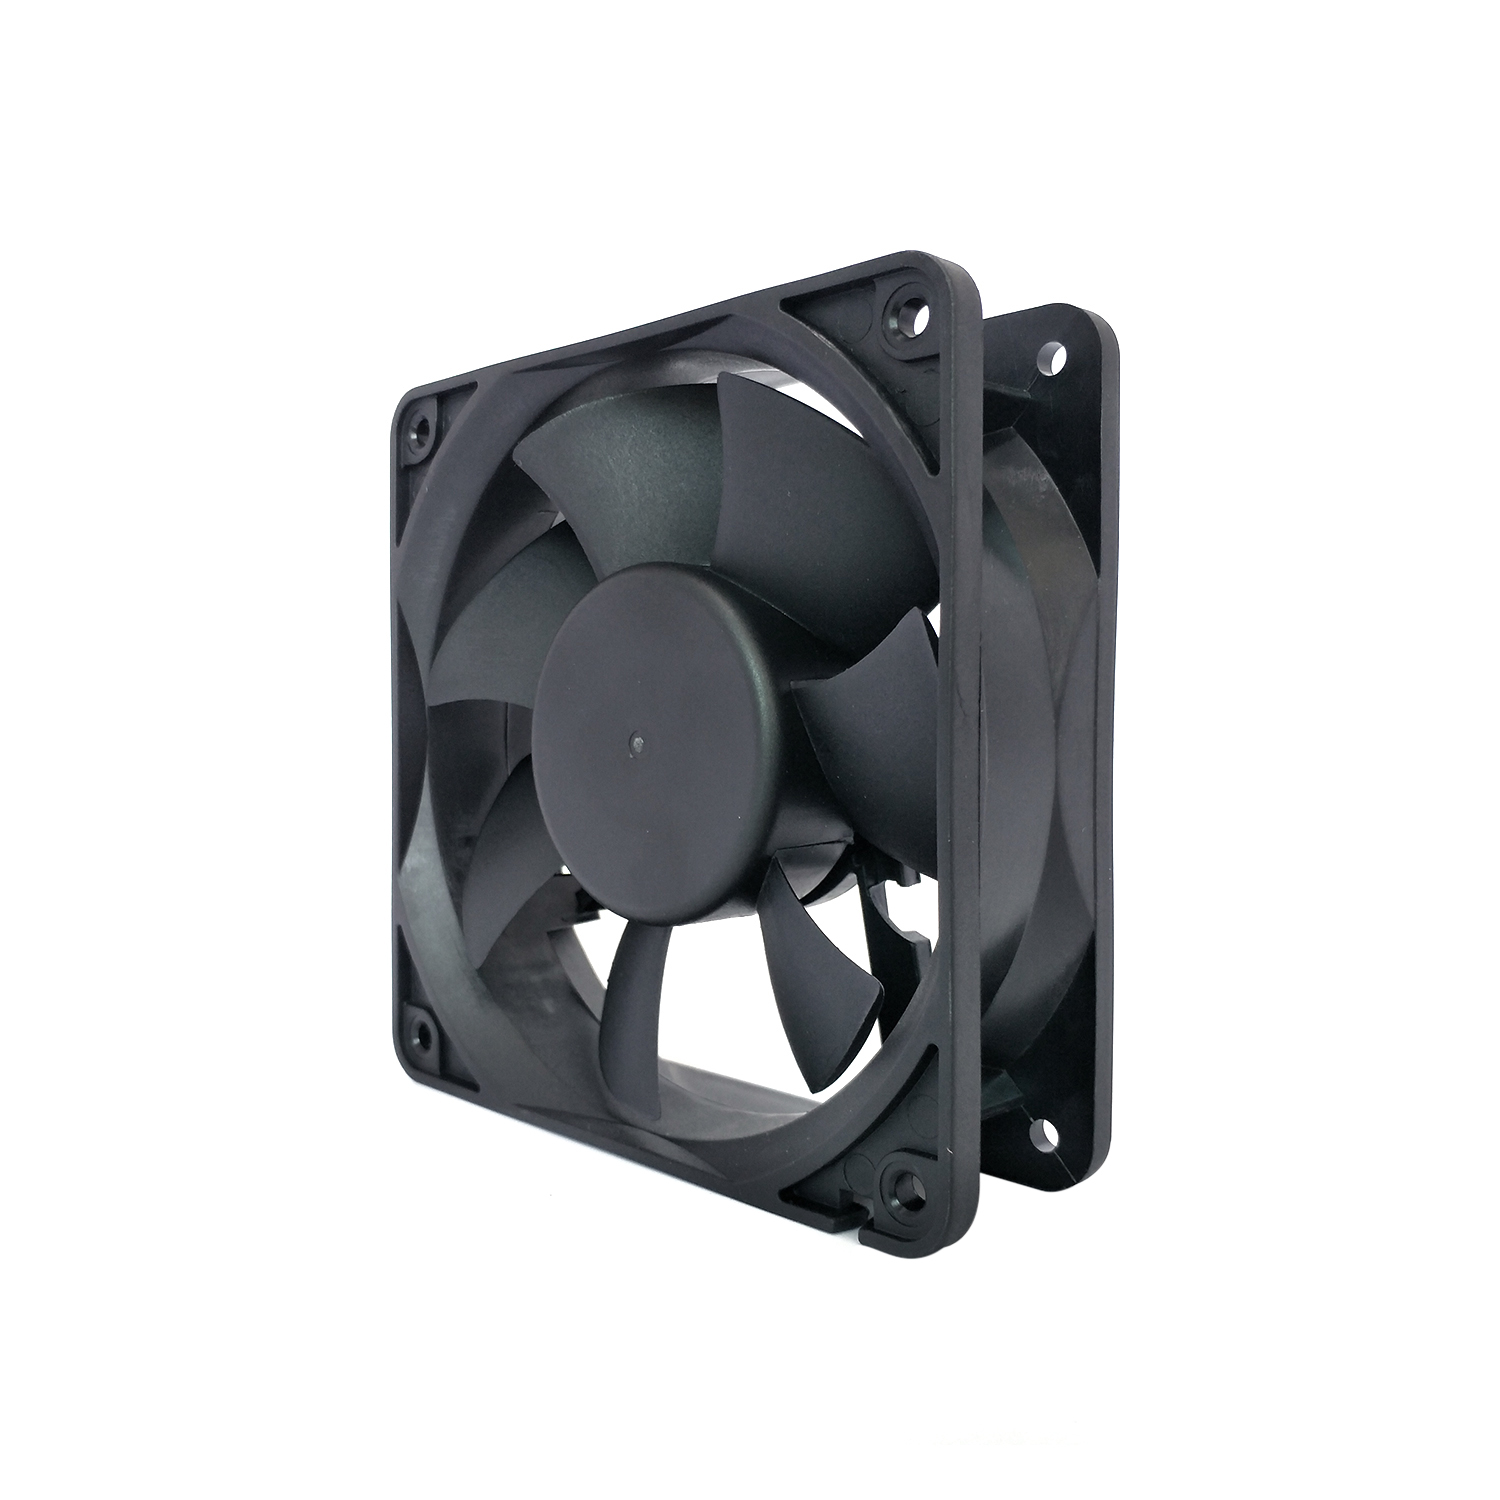 120x120x38mm industrial high air flow 12038 EC axial fan